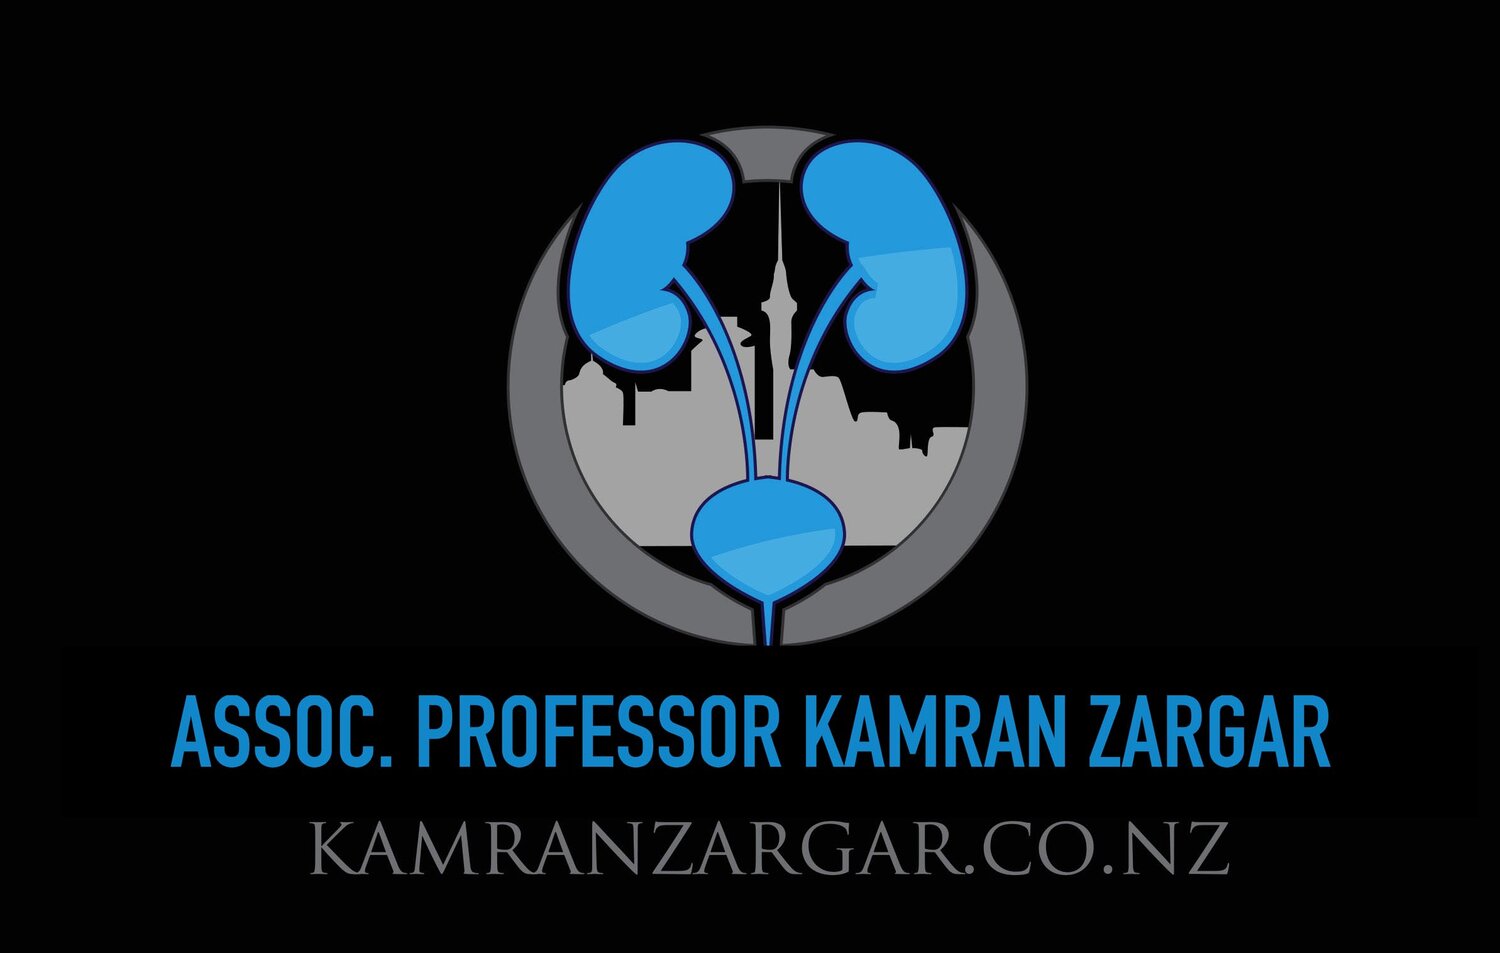 Assoc. Professor Kamran Zargar